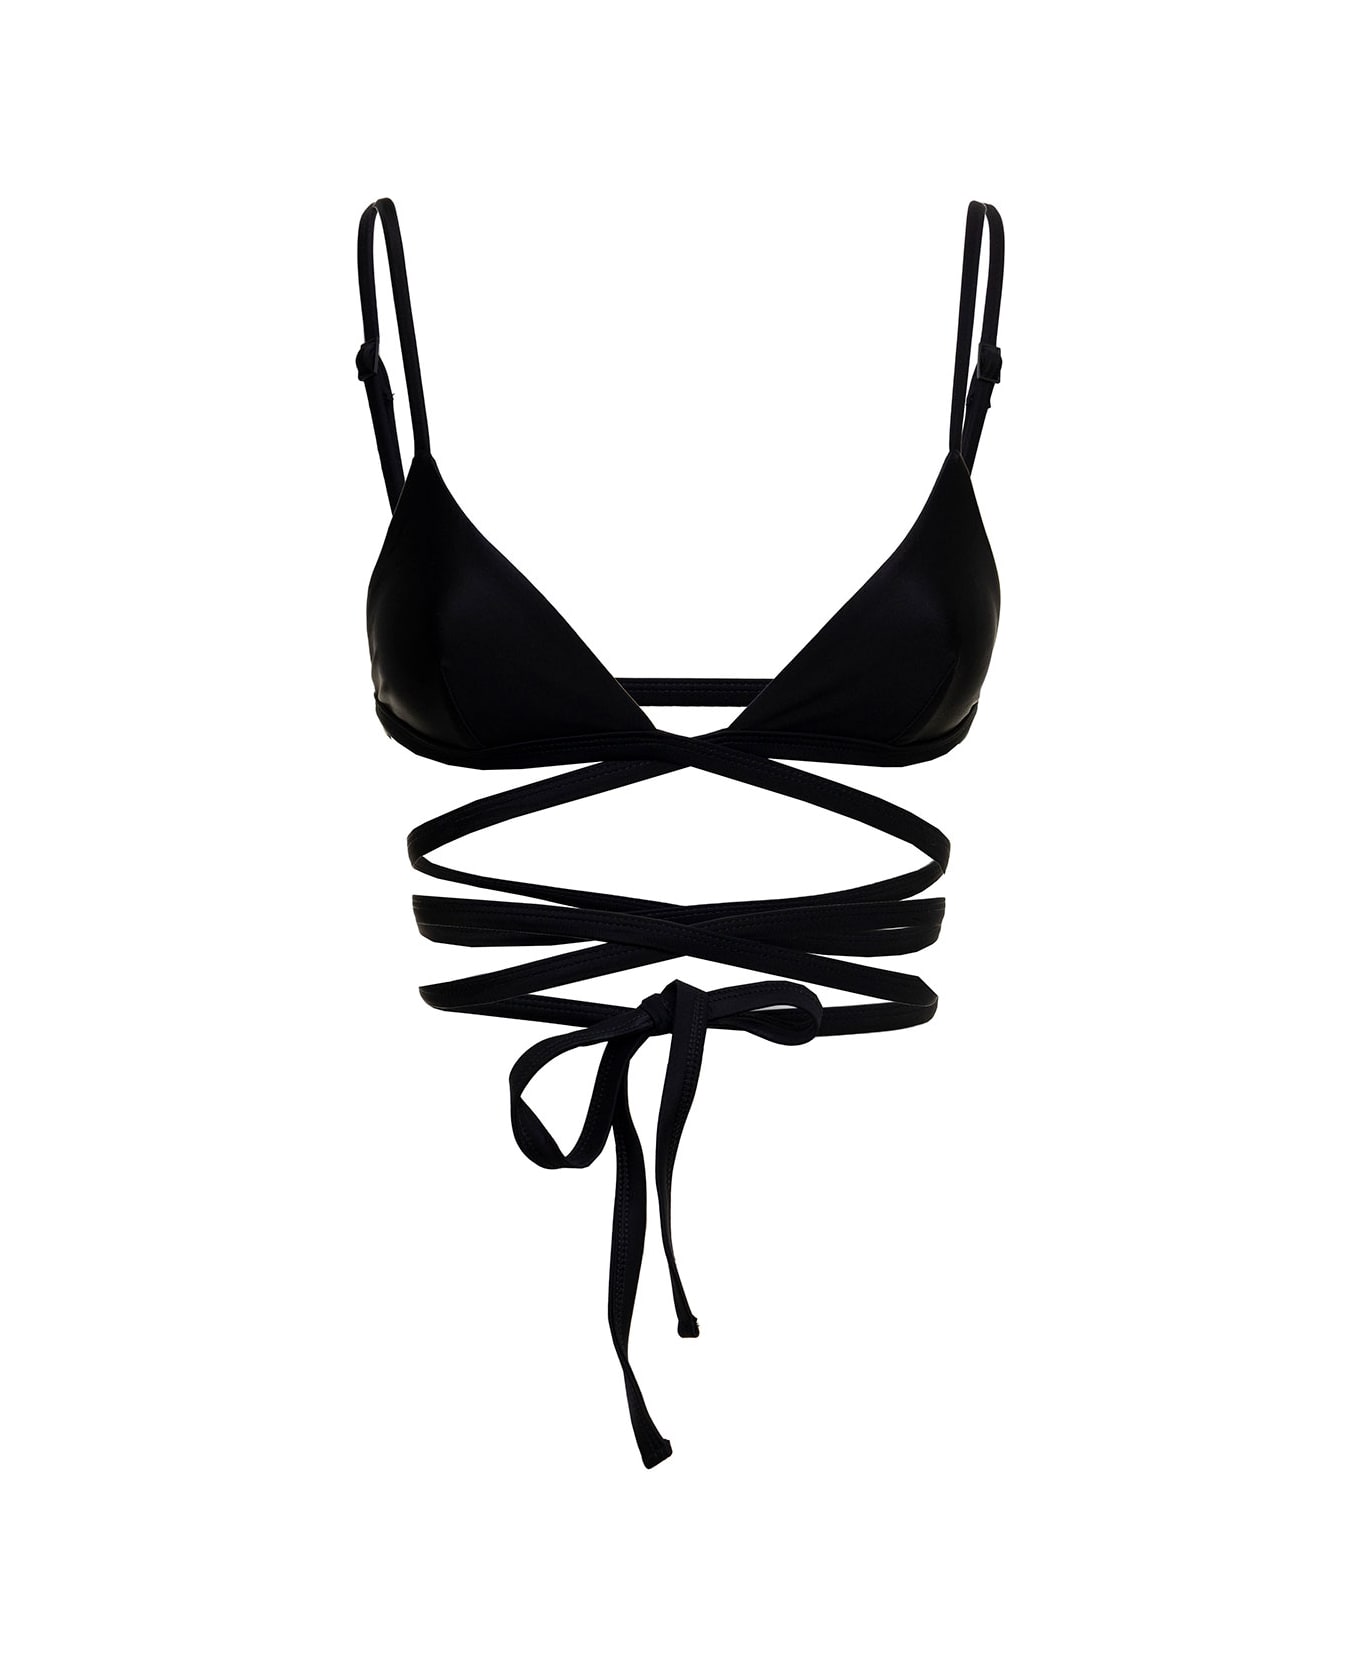 MATTEAU Woman's Black Nylon Bikini Top With Crossed Laces - Black